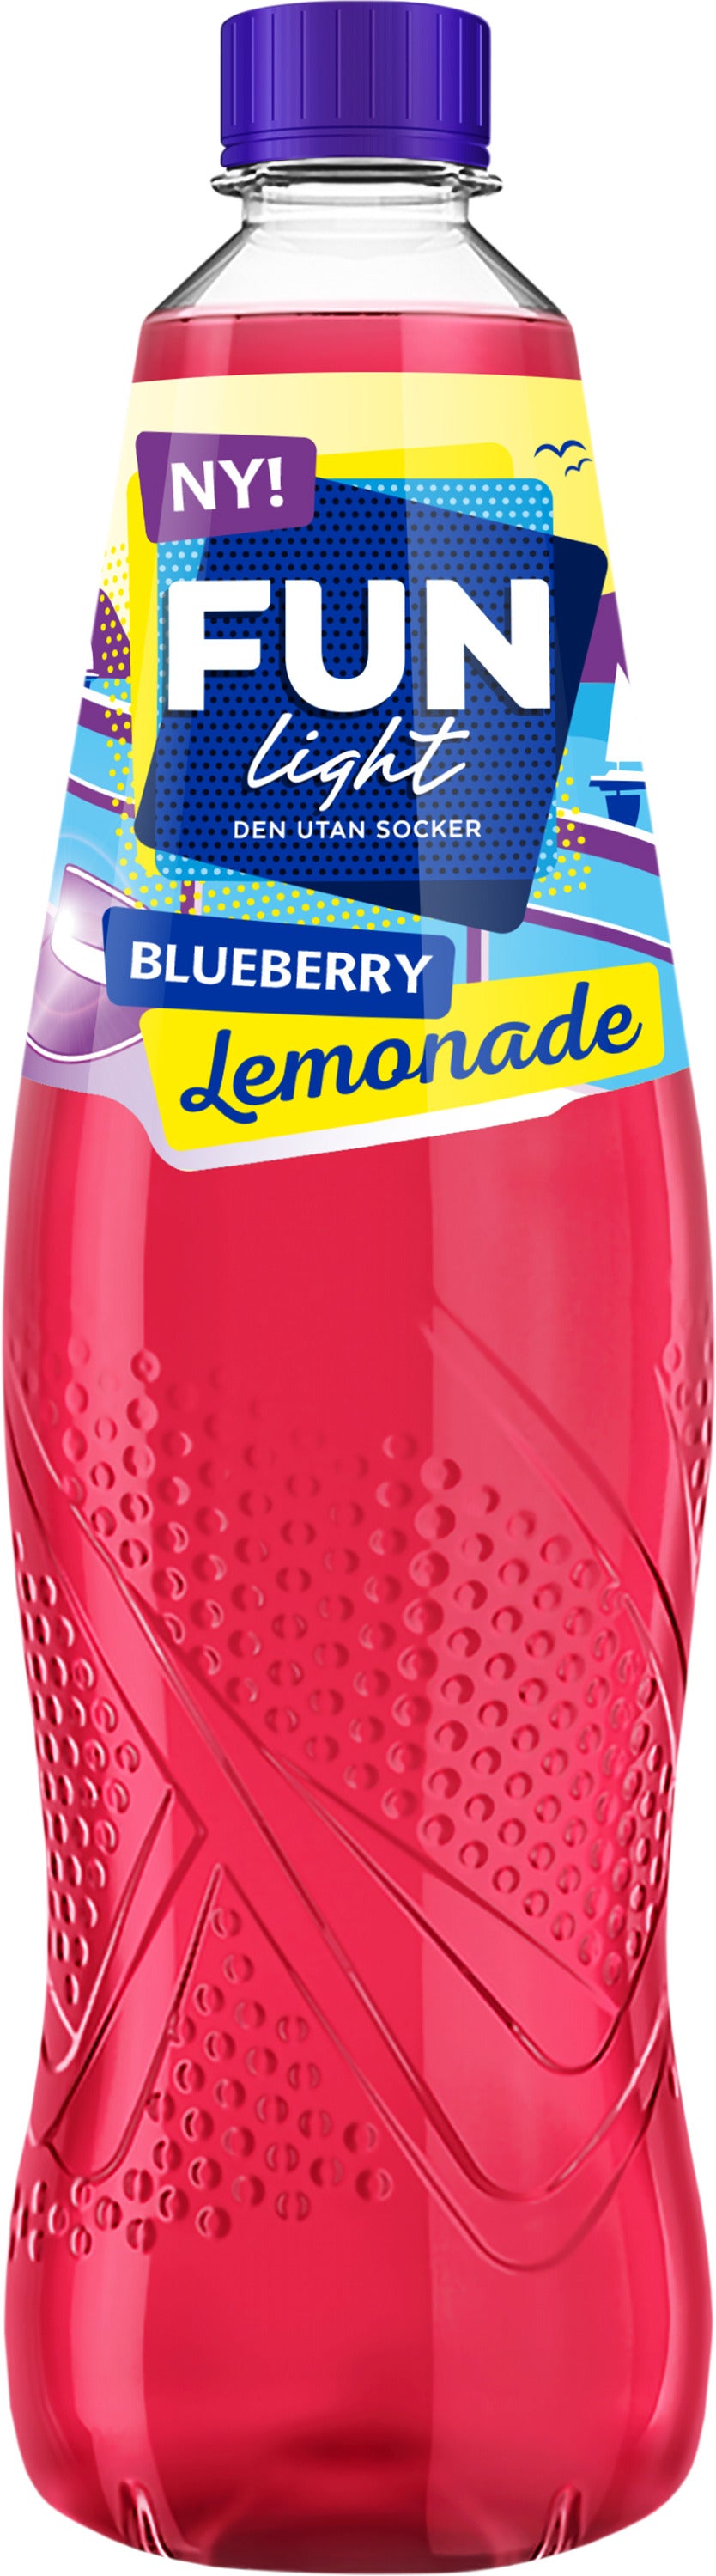 Fun Blueberry Lemonade –